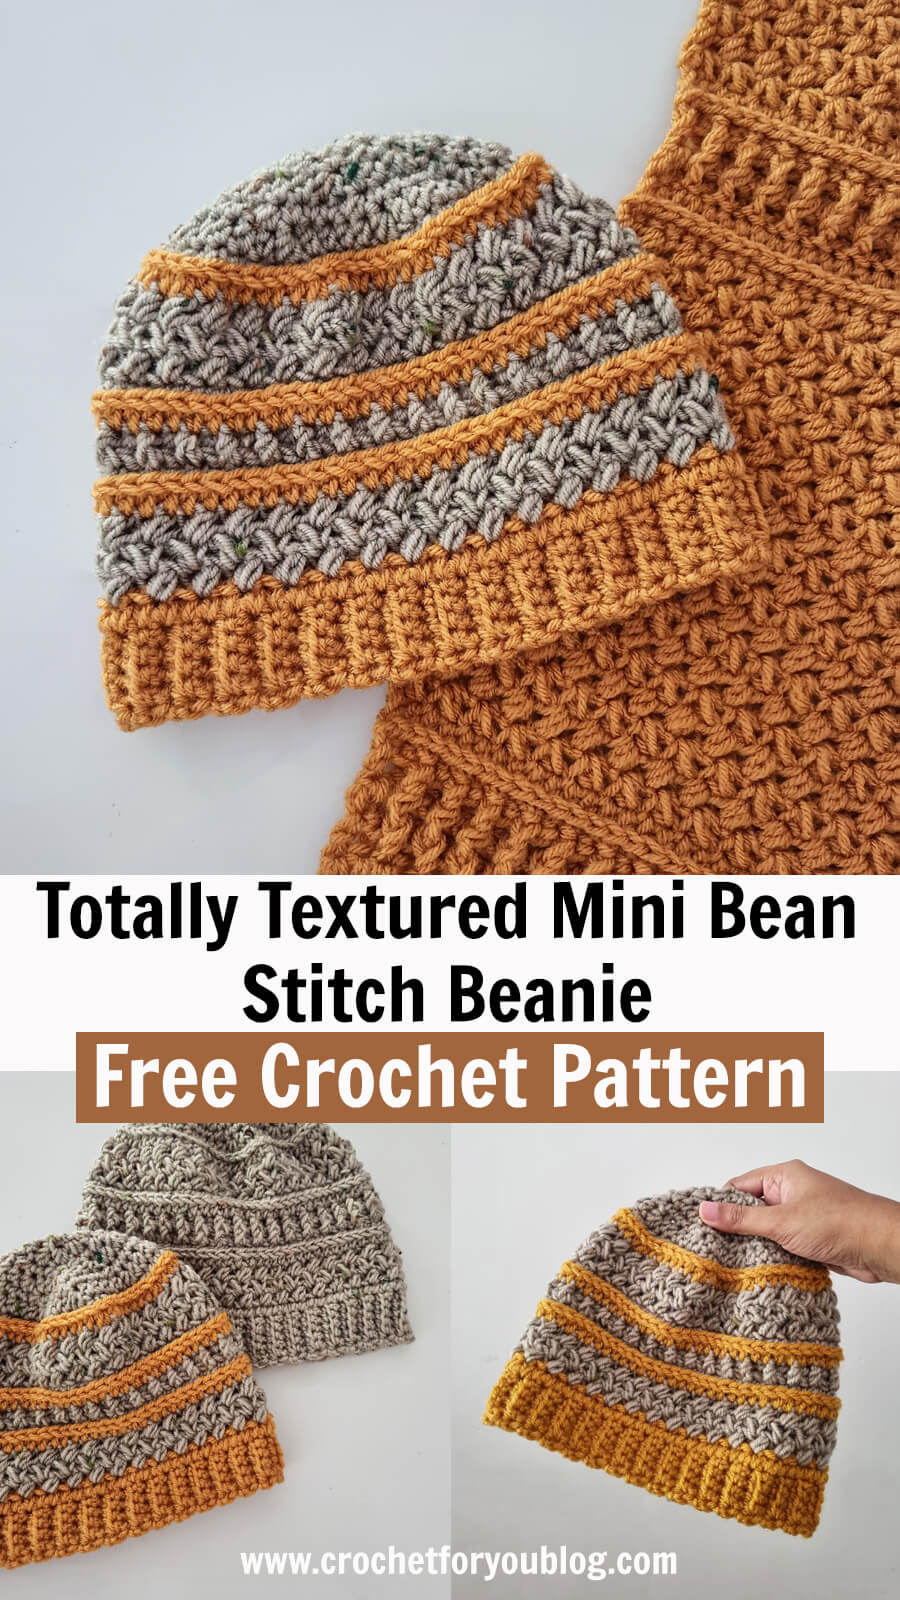 Free Crochet Beanie